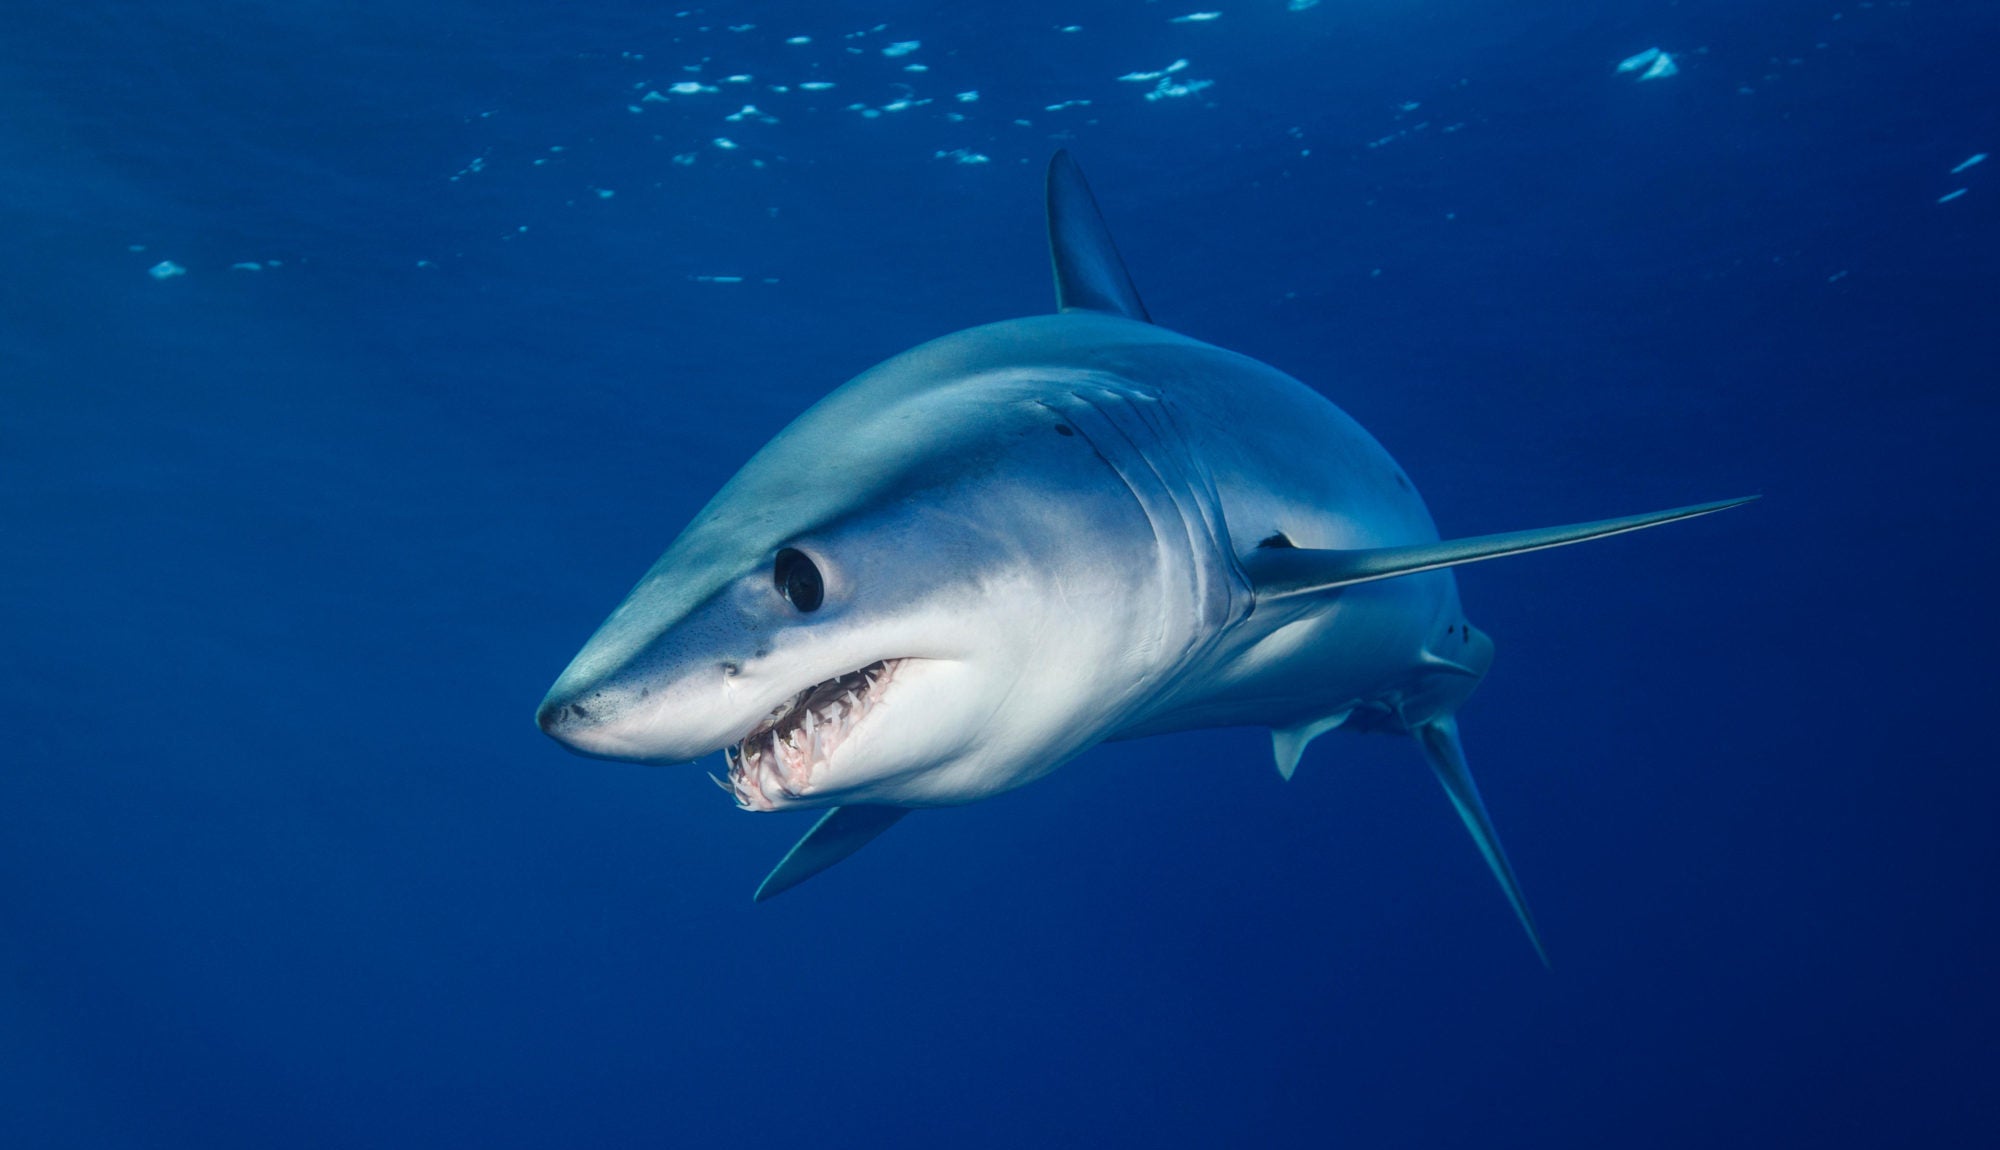 How fast do sharks swims